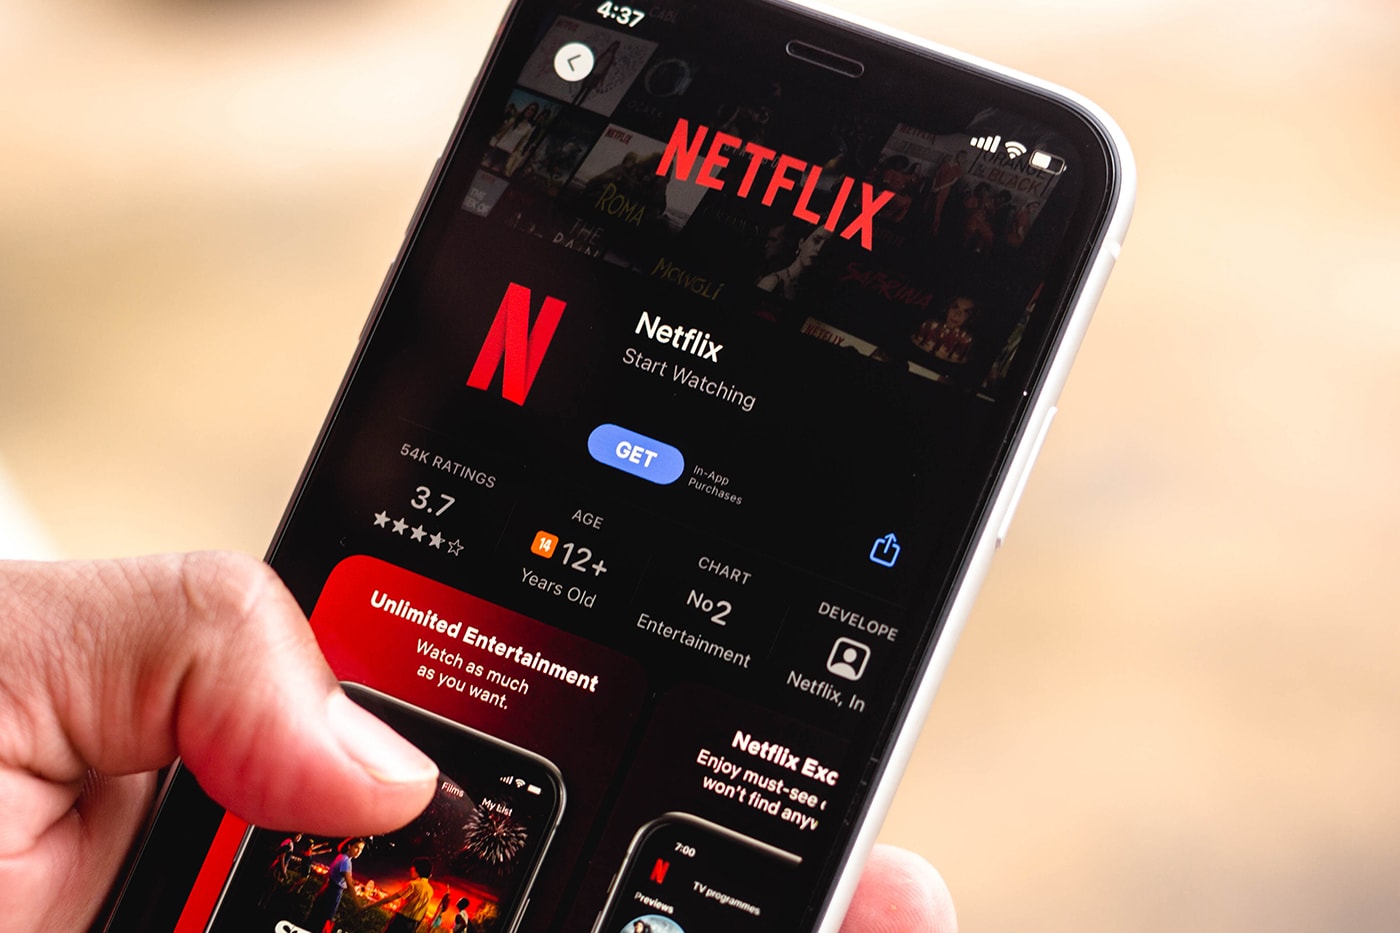 Netflix online hub original content N Plus survey platform app streaming streams tv shows movies info